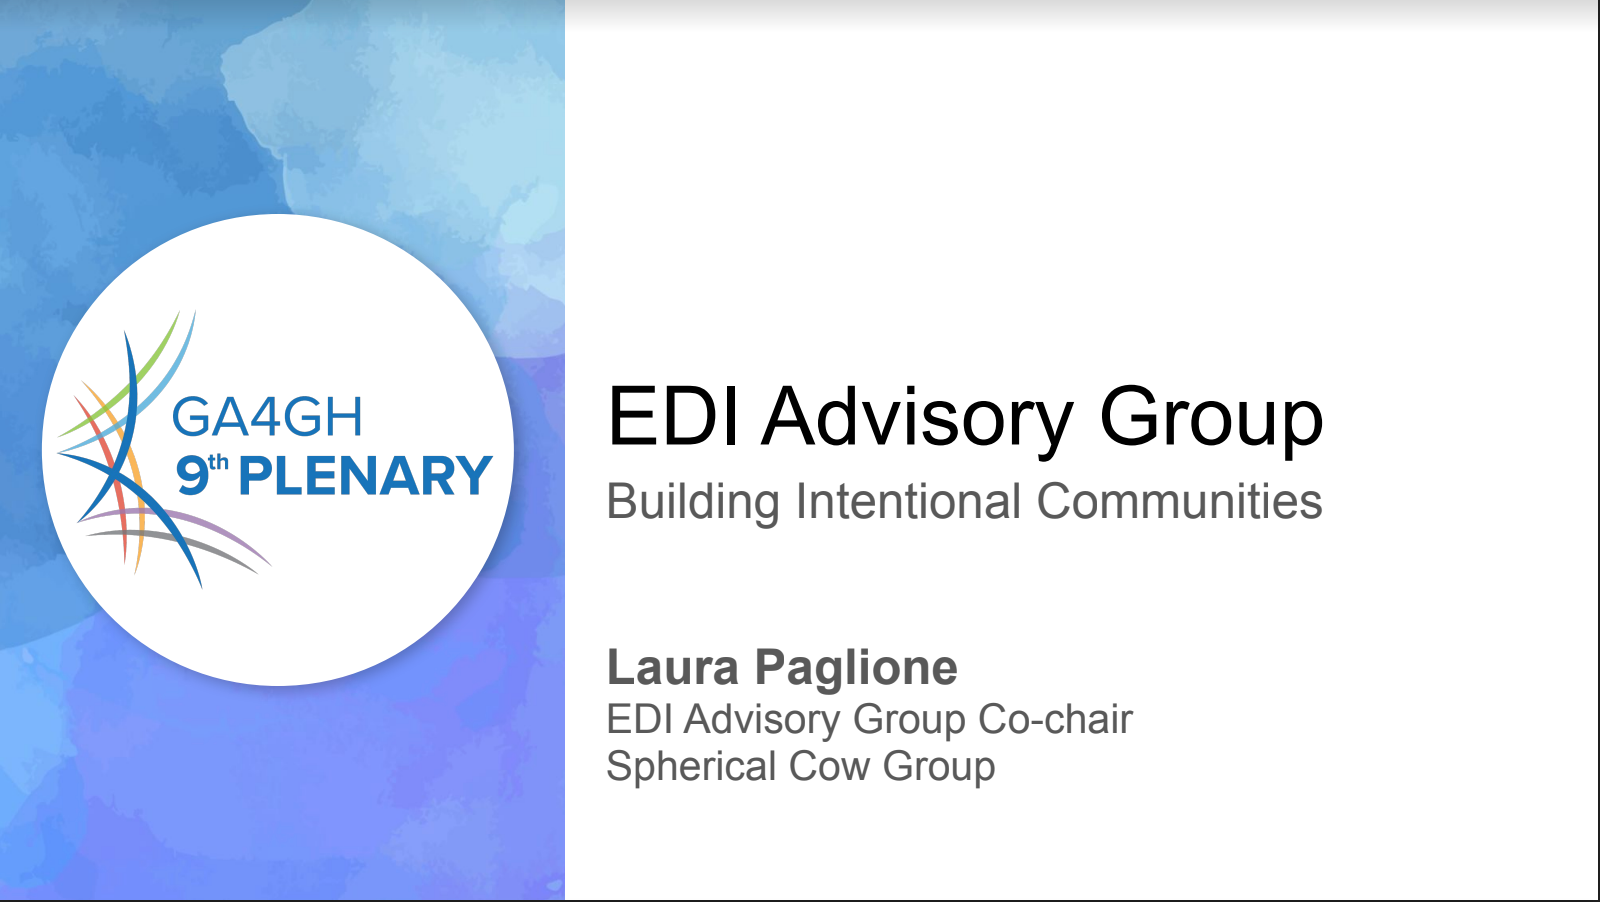 EDI Advisory Group: Building Intentional Communities, GA4GH 9th Plenary